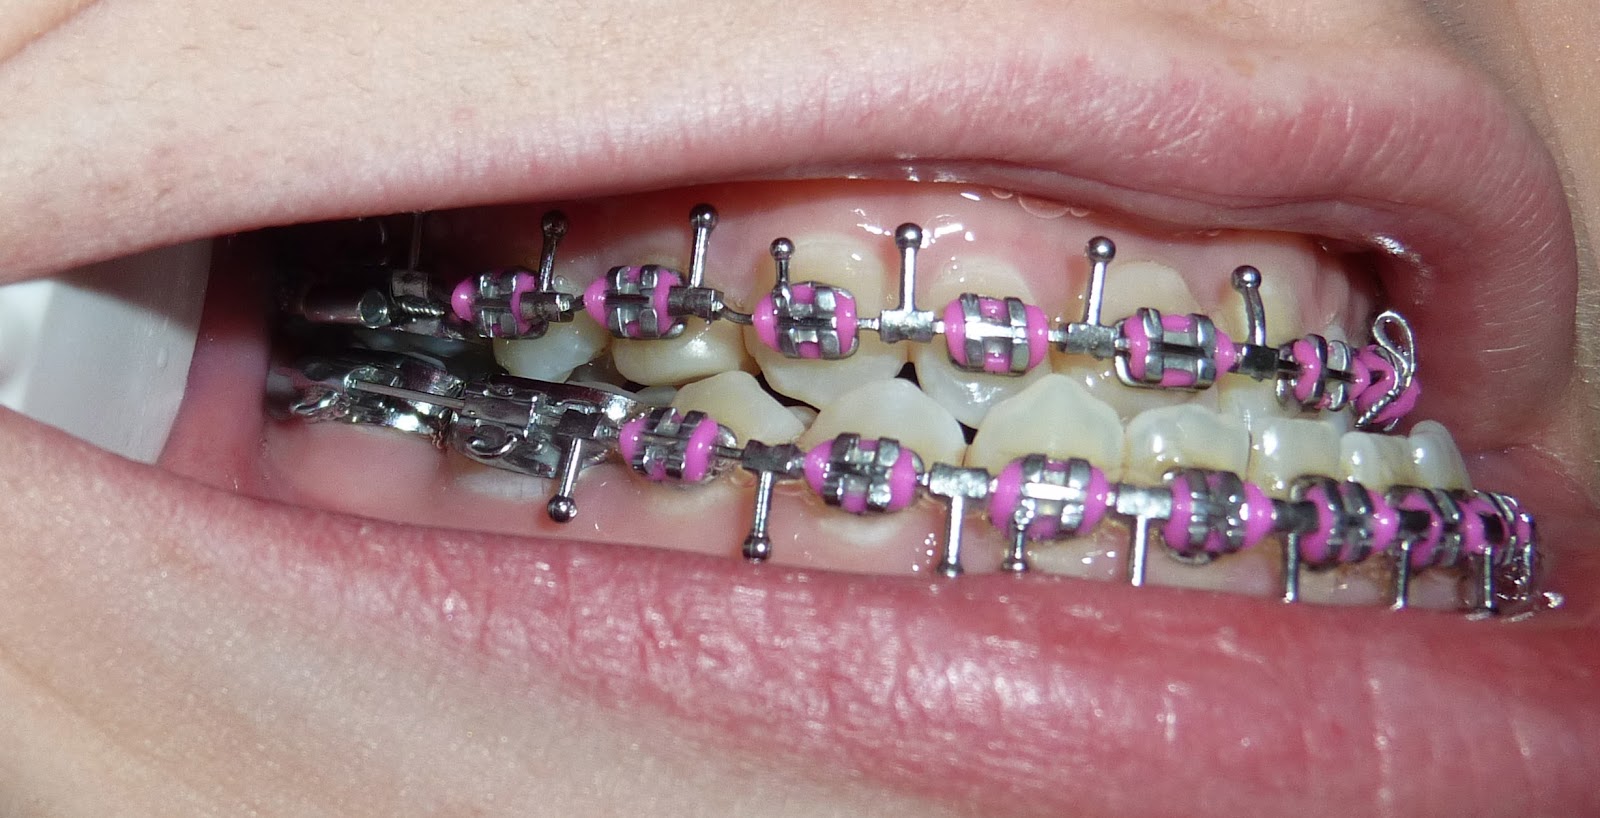 14 ramas de la odontología